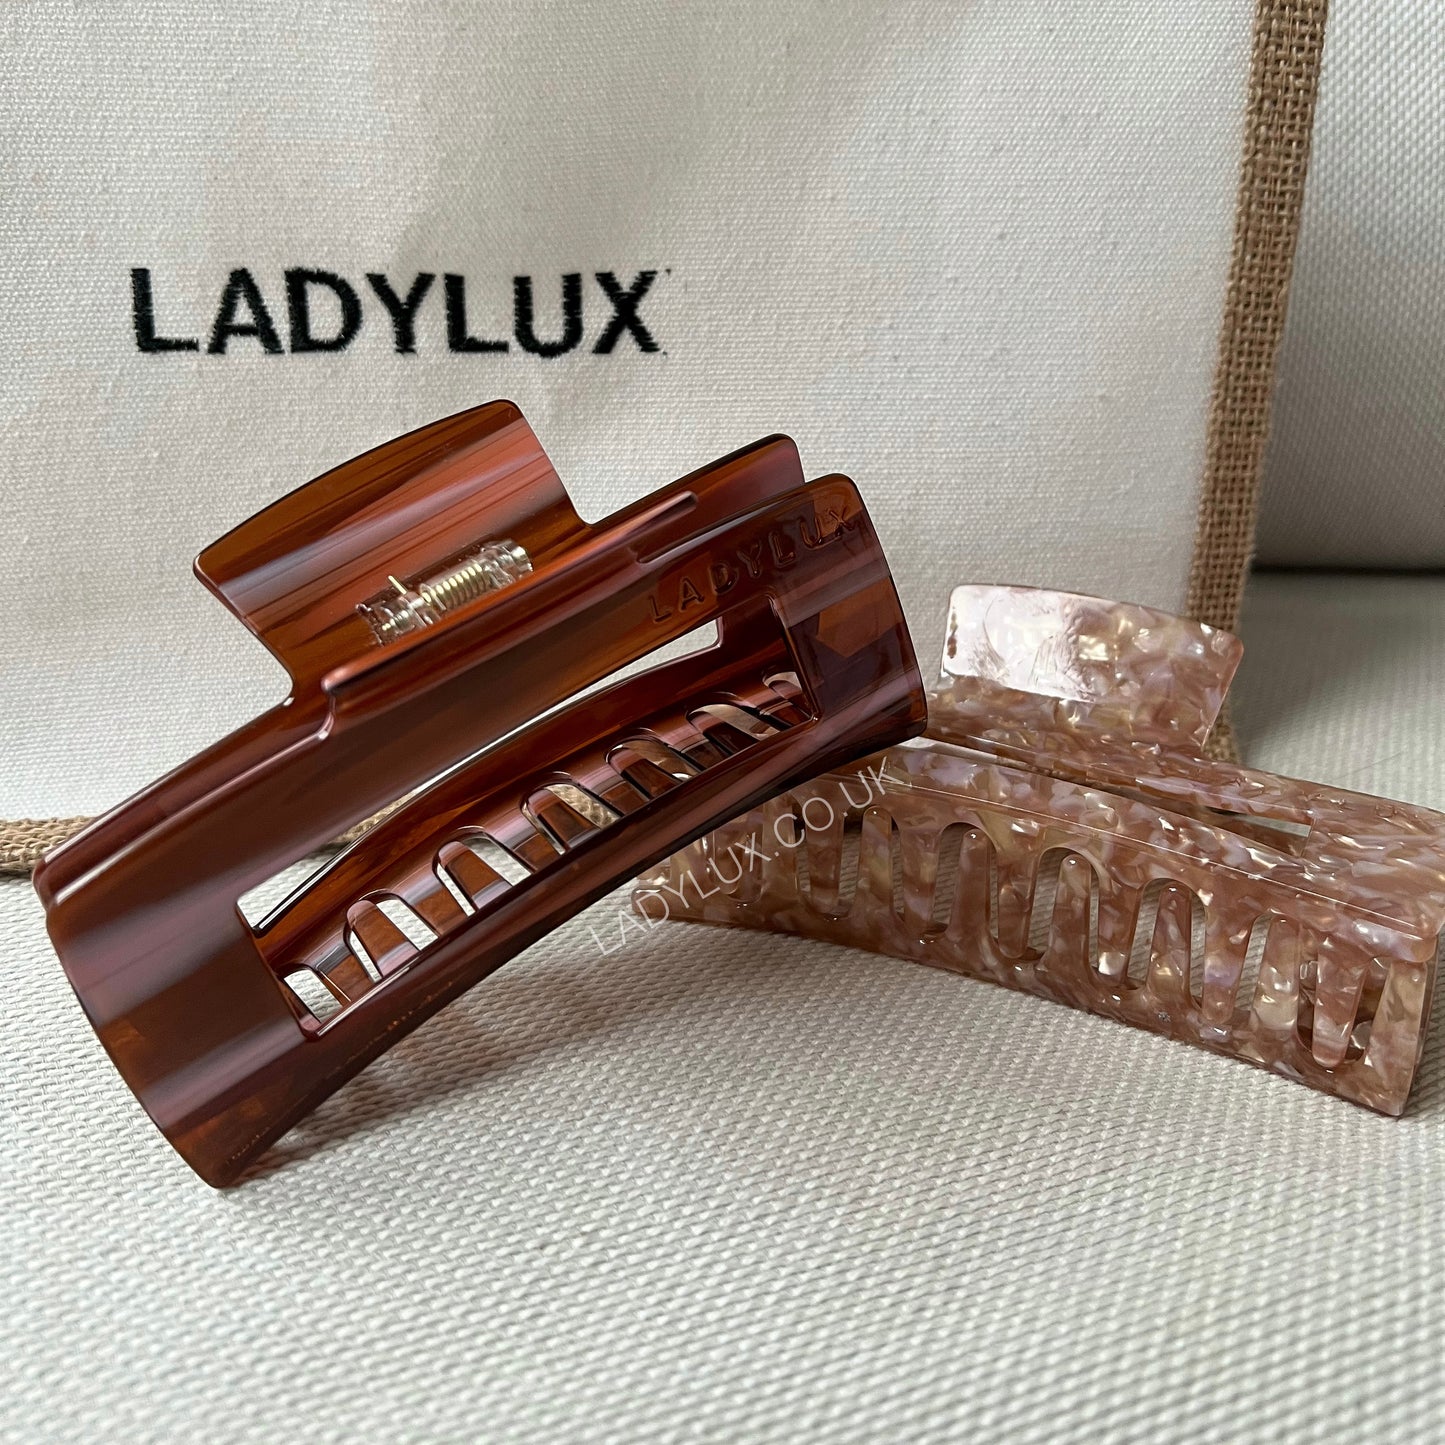 XXL Jumbo Claw Clip - Shade Rockyroad - Ladylux